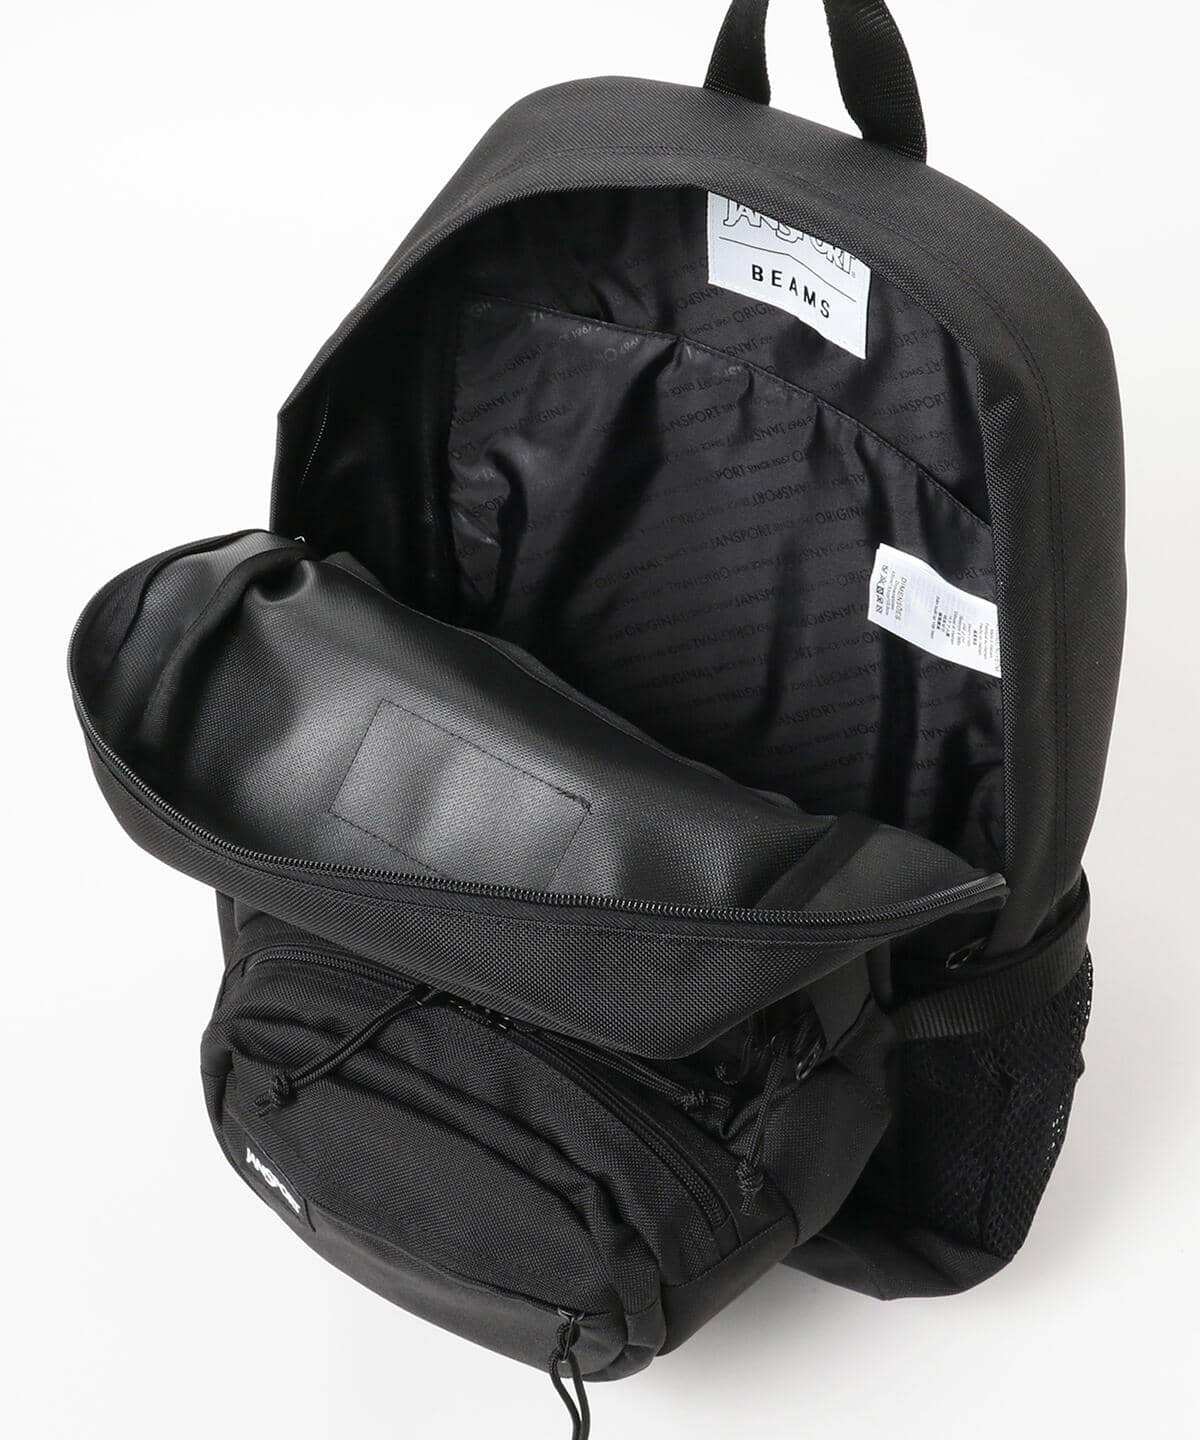 JanSport Rucksack BEAMS COLLAB Backpack Black